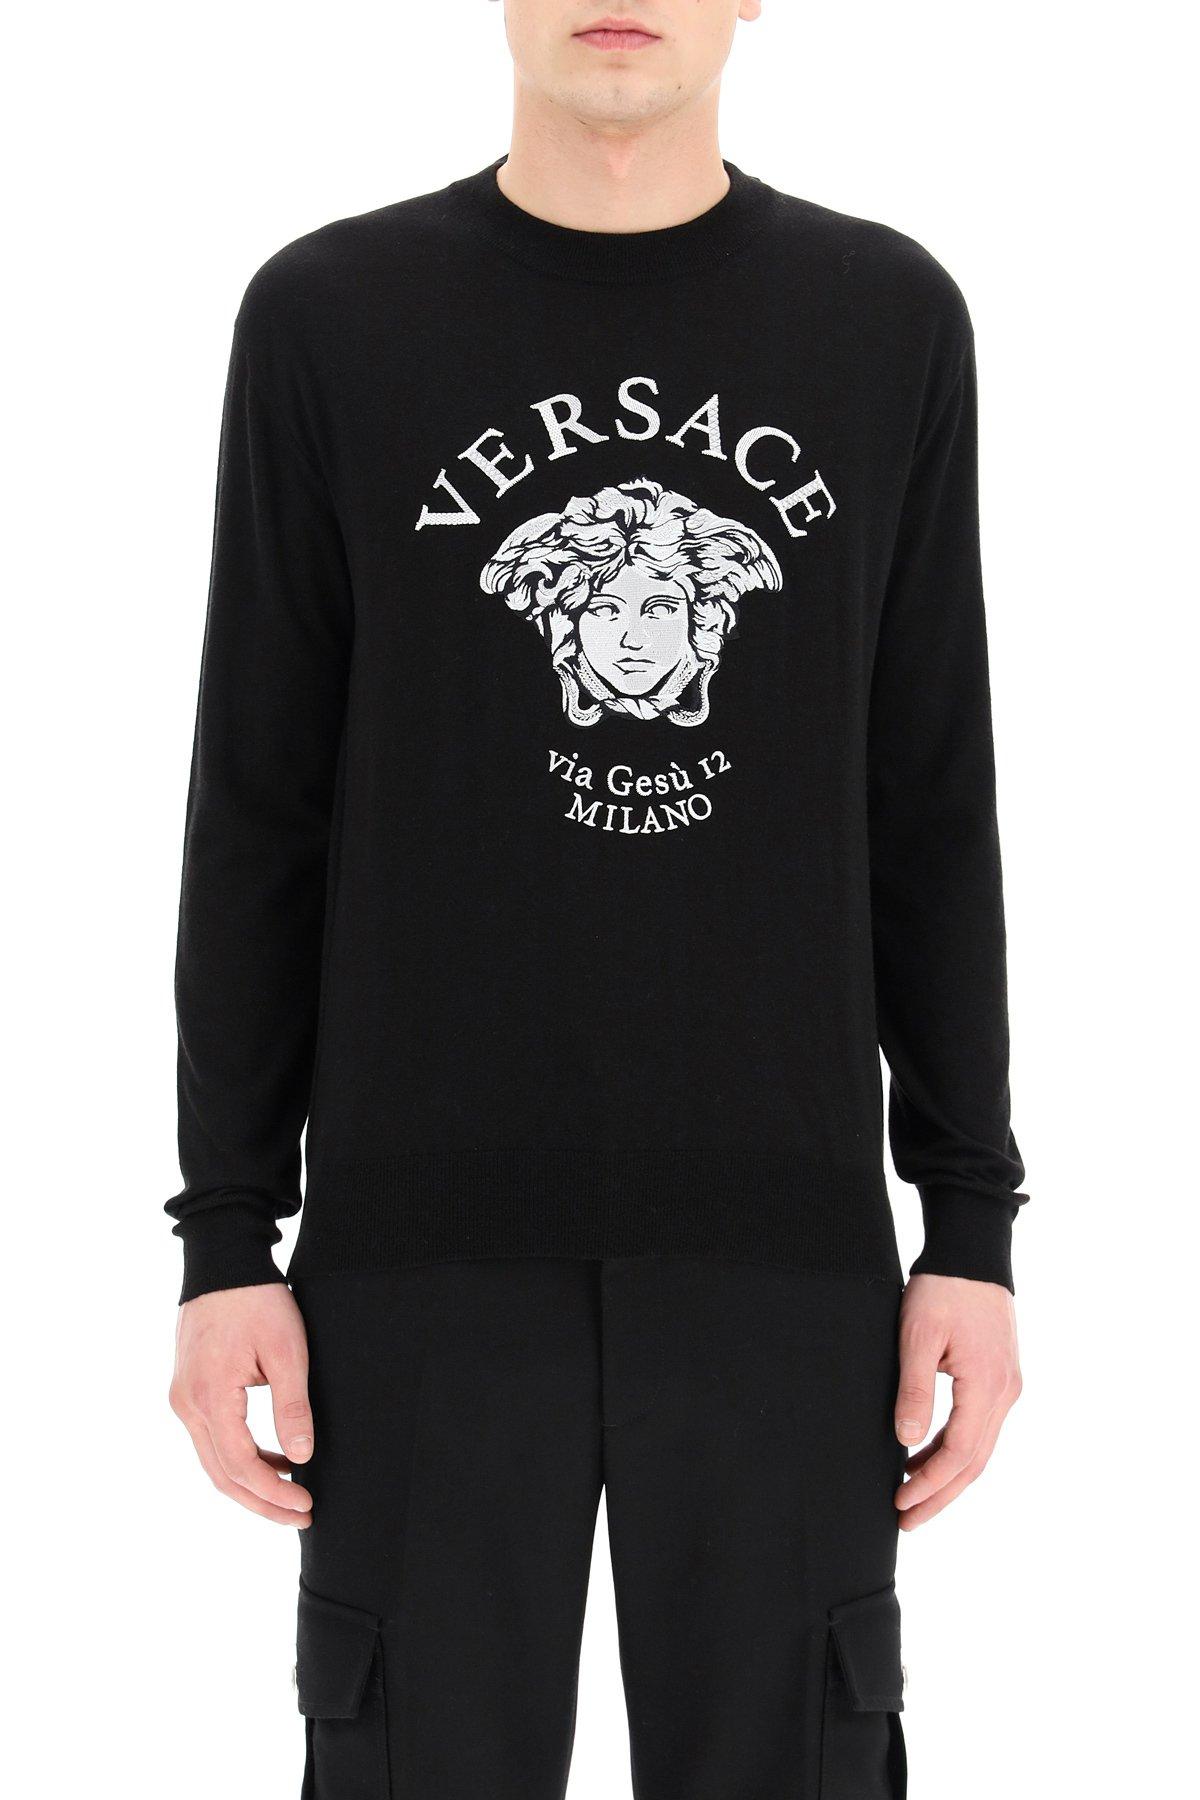 Versace Cotton Sweater Medusa Via Gesù 12 in Black for Men - Save 3% - Lyst